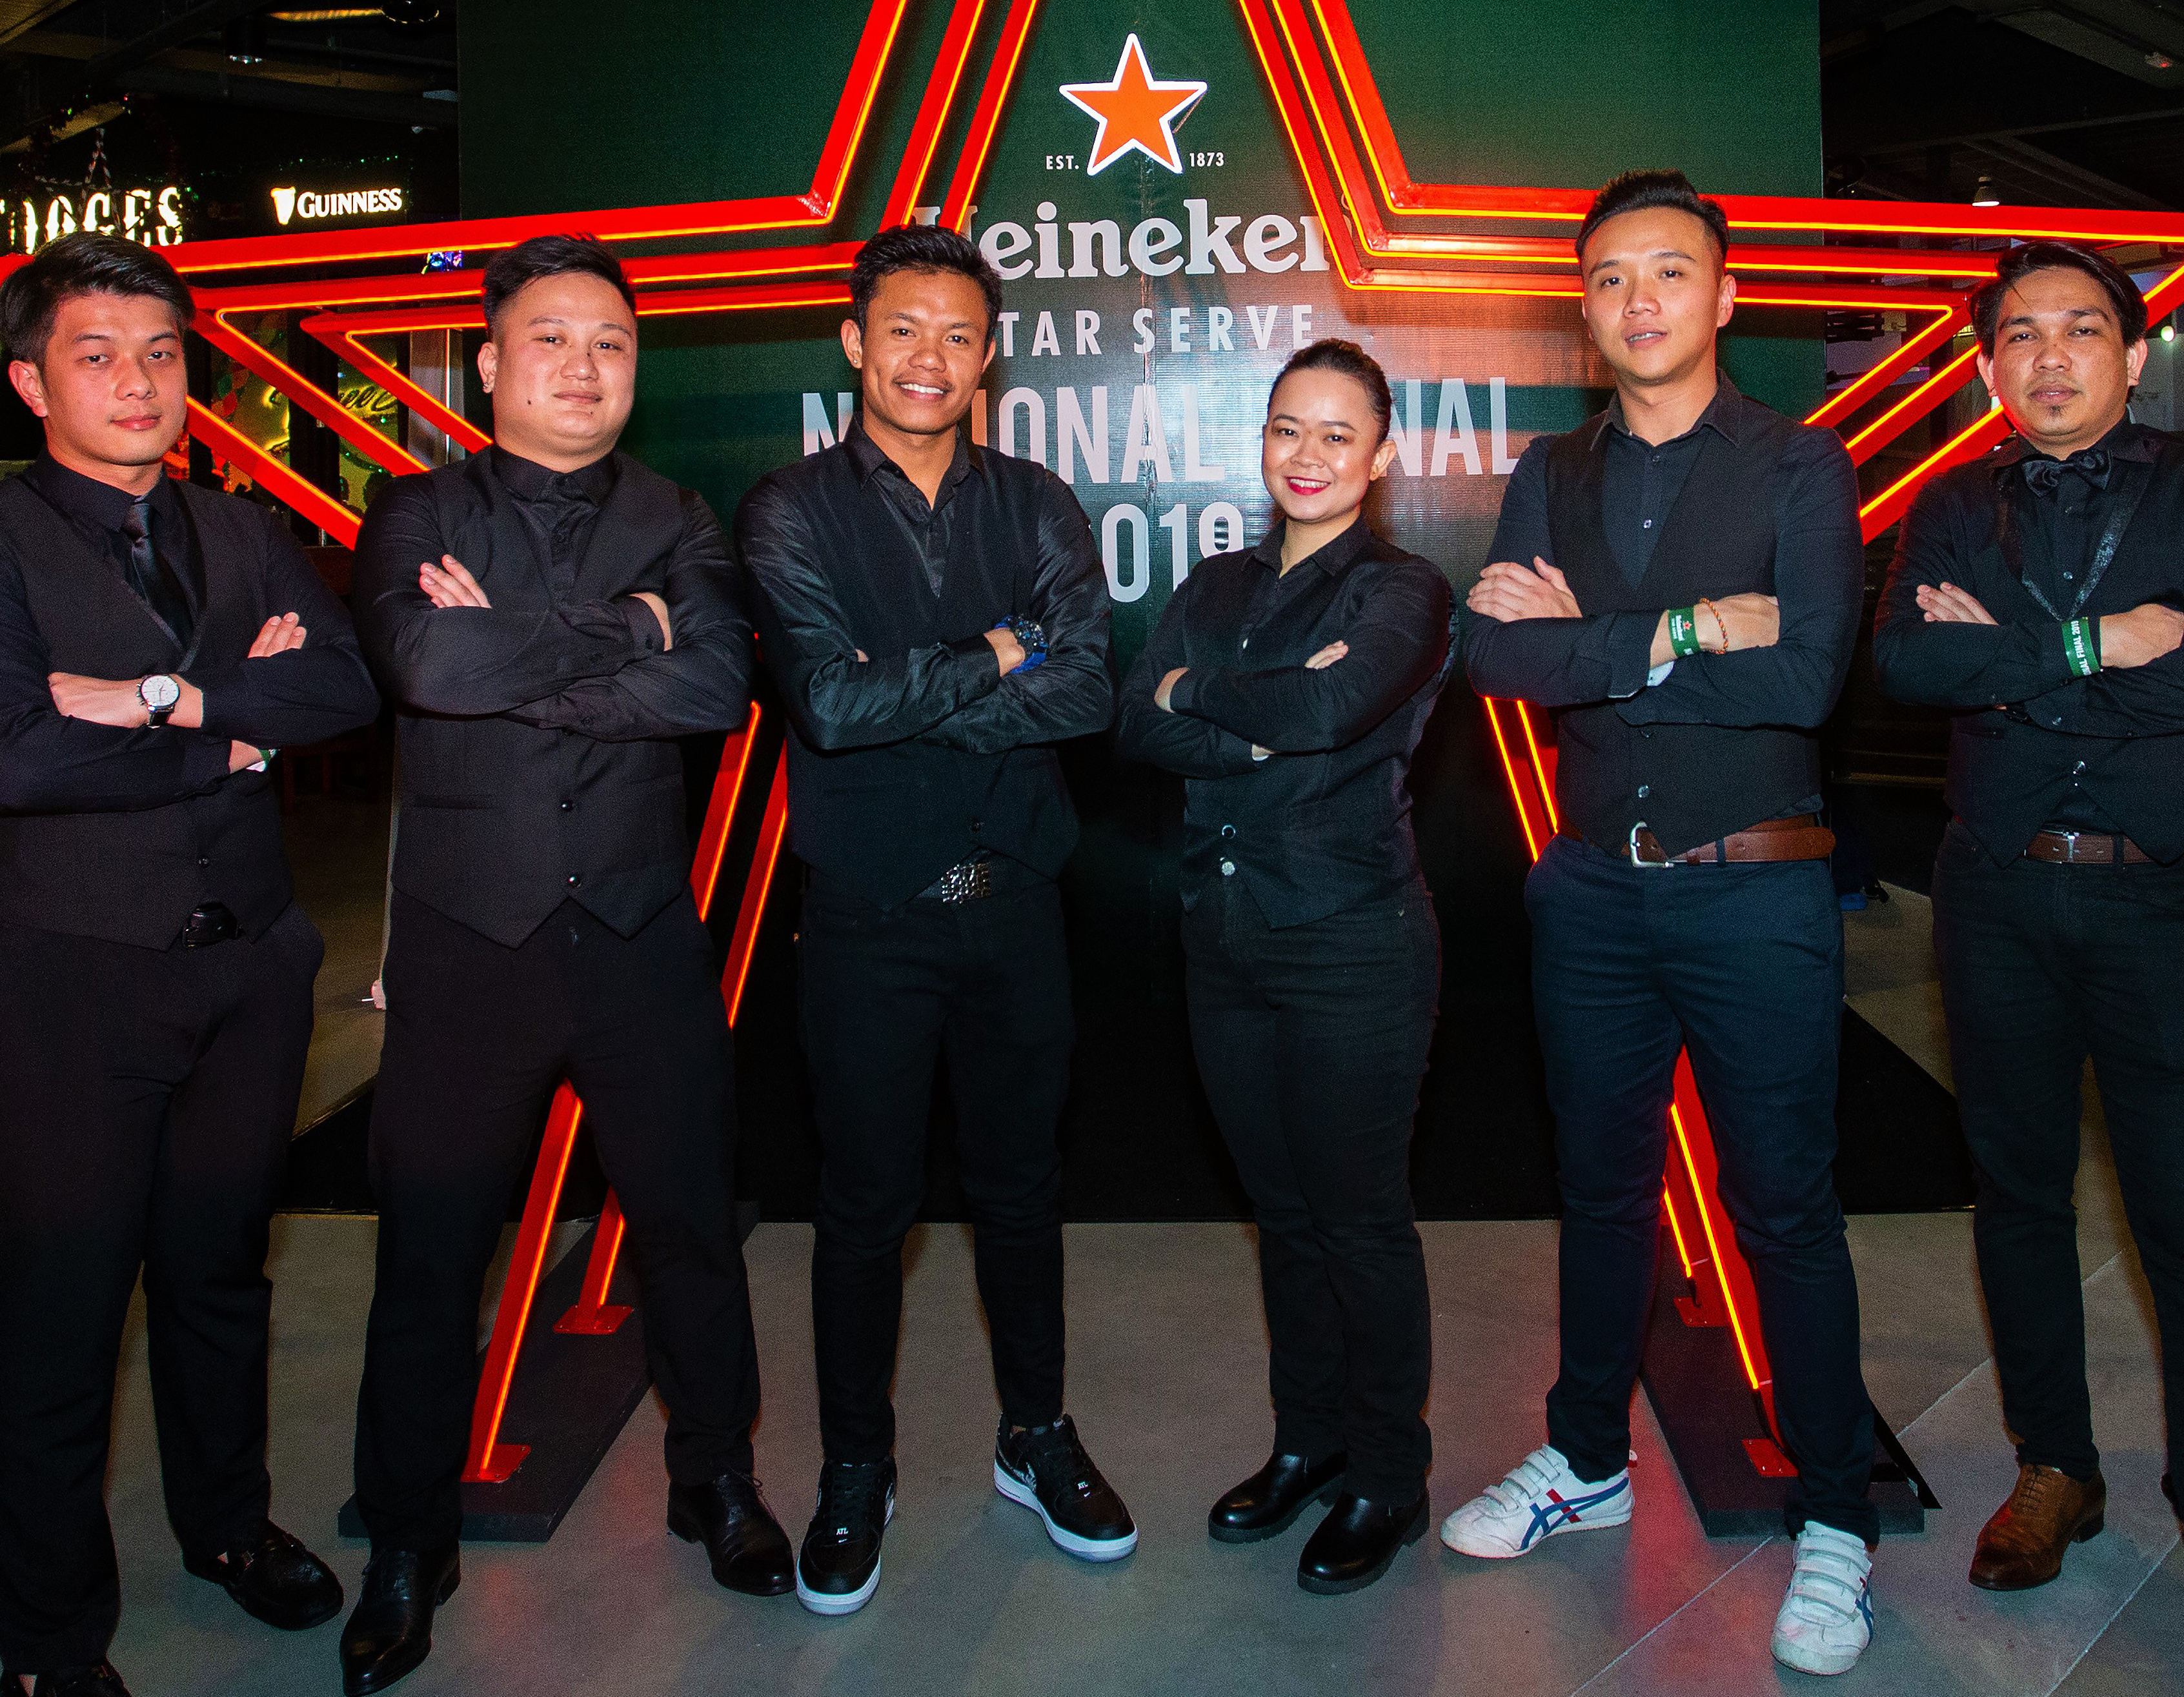 Heineken Star Serve National Final 2019_02-v2